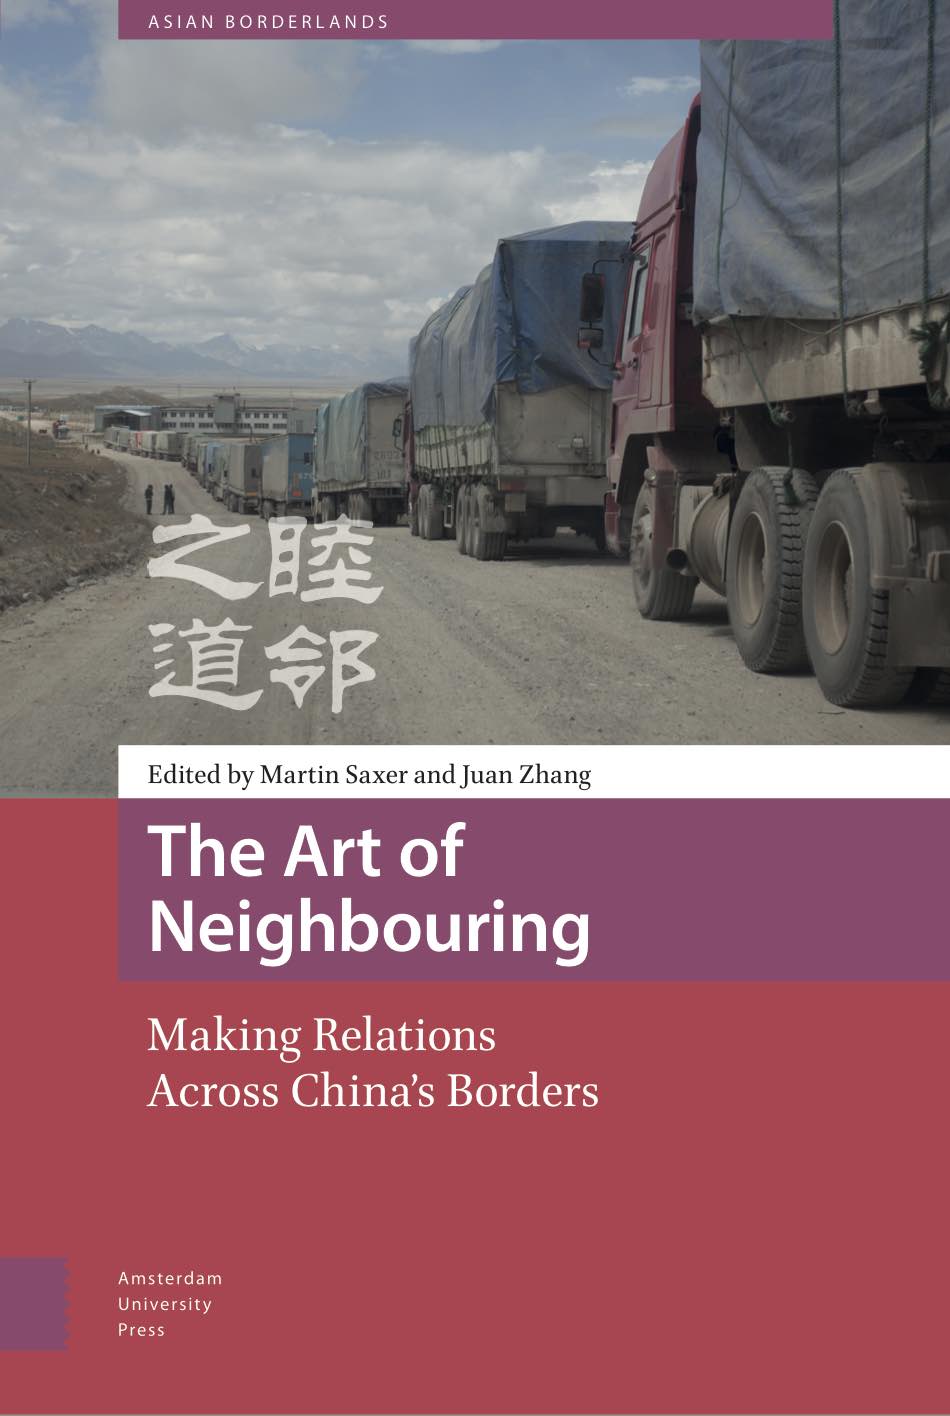 Saxer, Martin and Juan Zhang. 2016. The Art of Neighbouring: Making Relations Across Chinese Borders. Amsterdam, Amsterdam University Press.